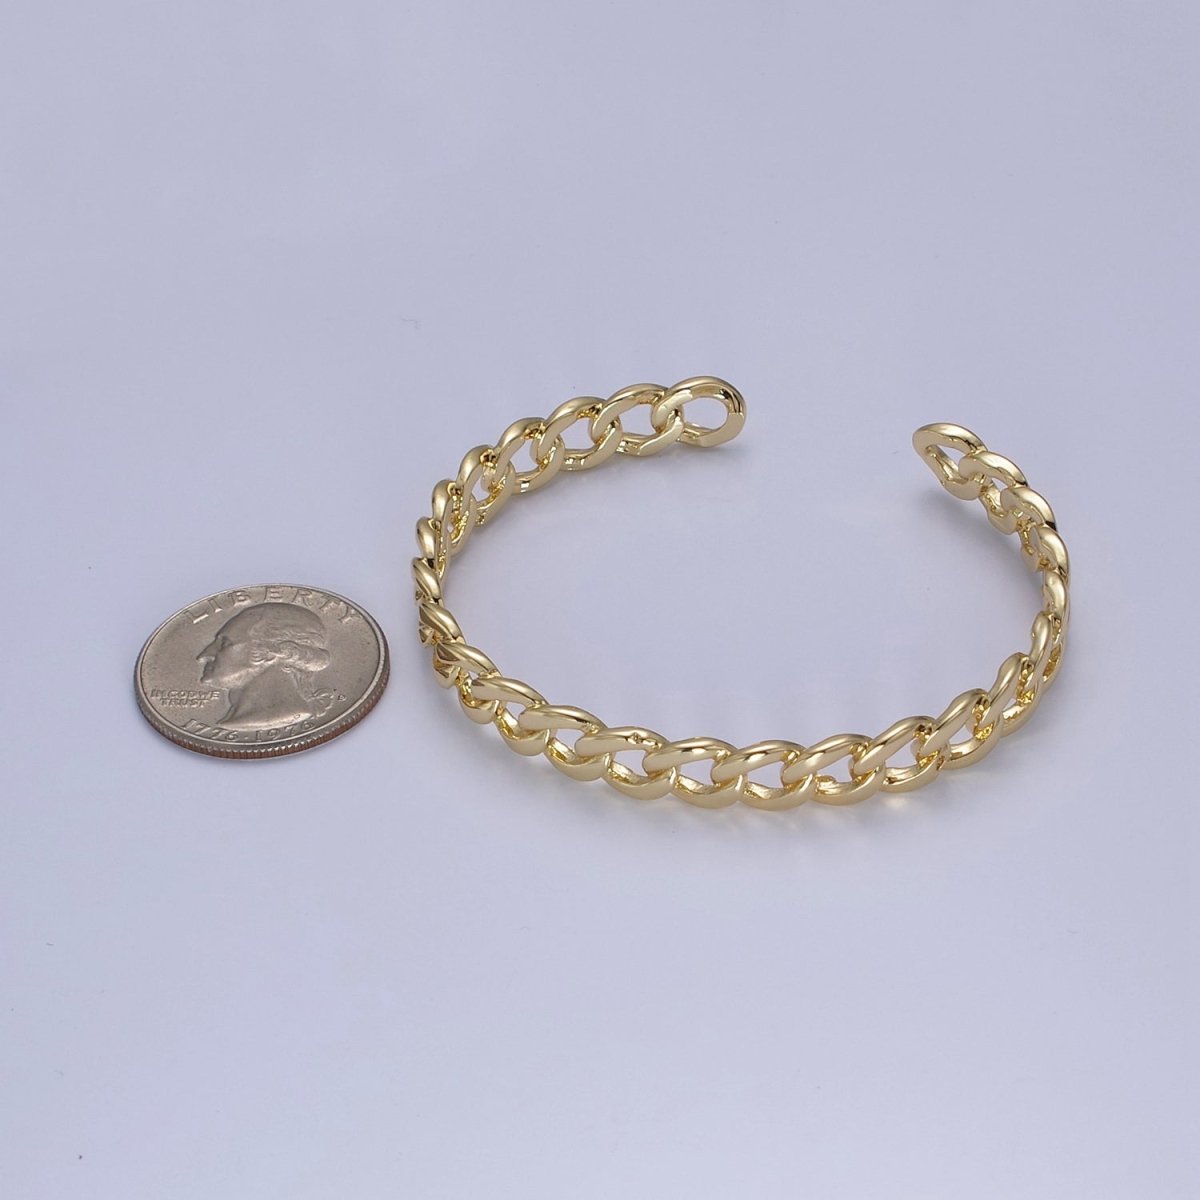 Wholesale Chain Link Cuff Bangle Bracelet, curb link bracelet, gold bangle, cuff bracelet, gold cuff, wrist cuff, stackable bracelet | WA-678 Clearance Pricing - DLUXCA